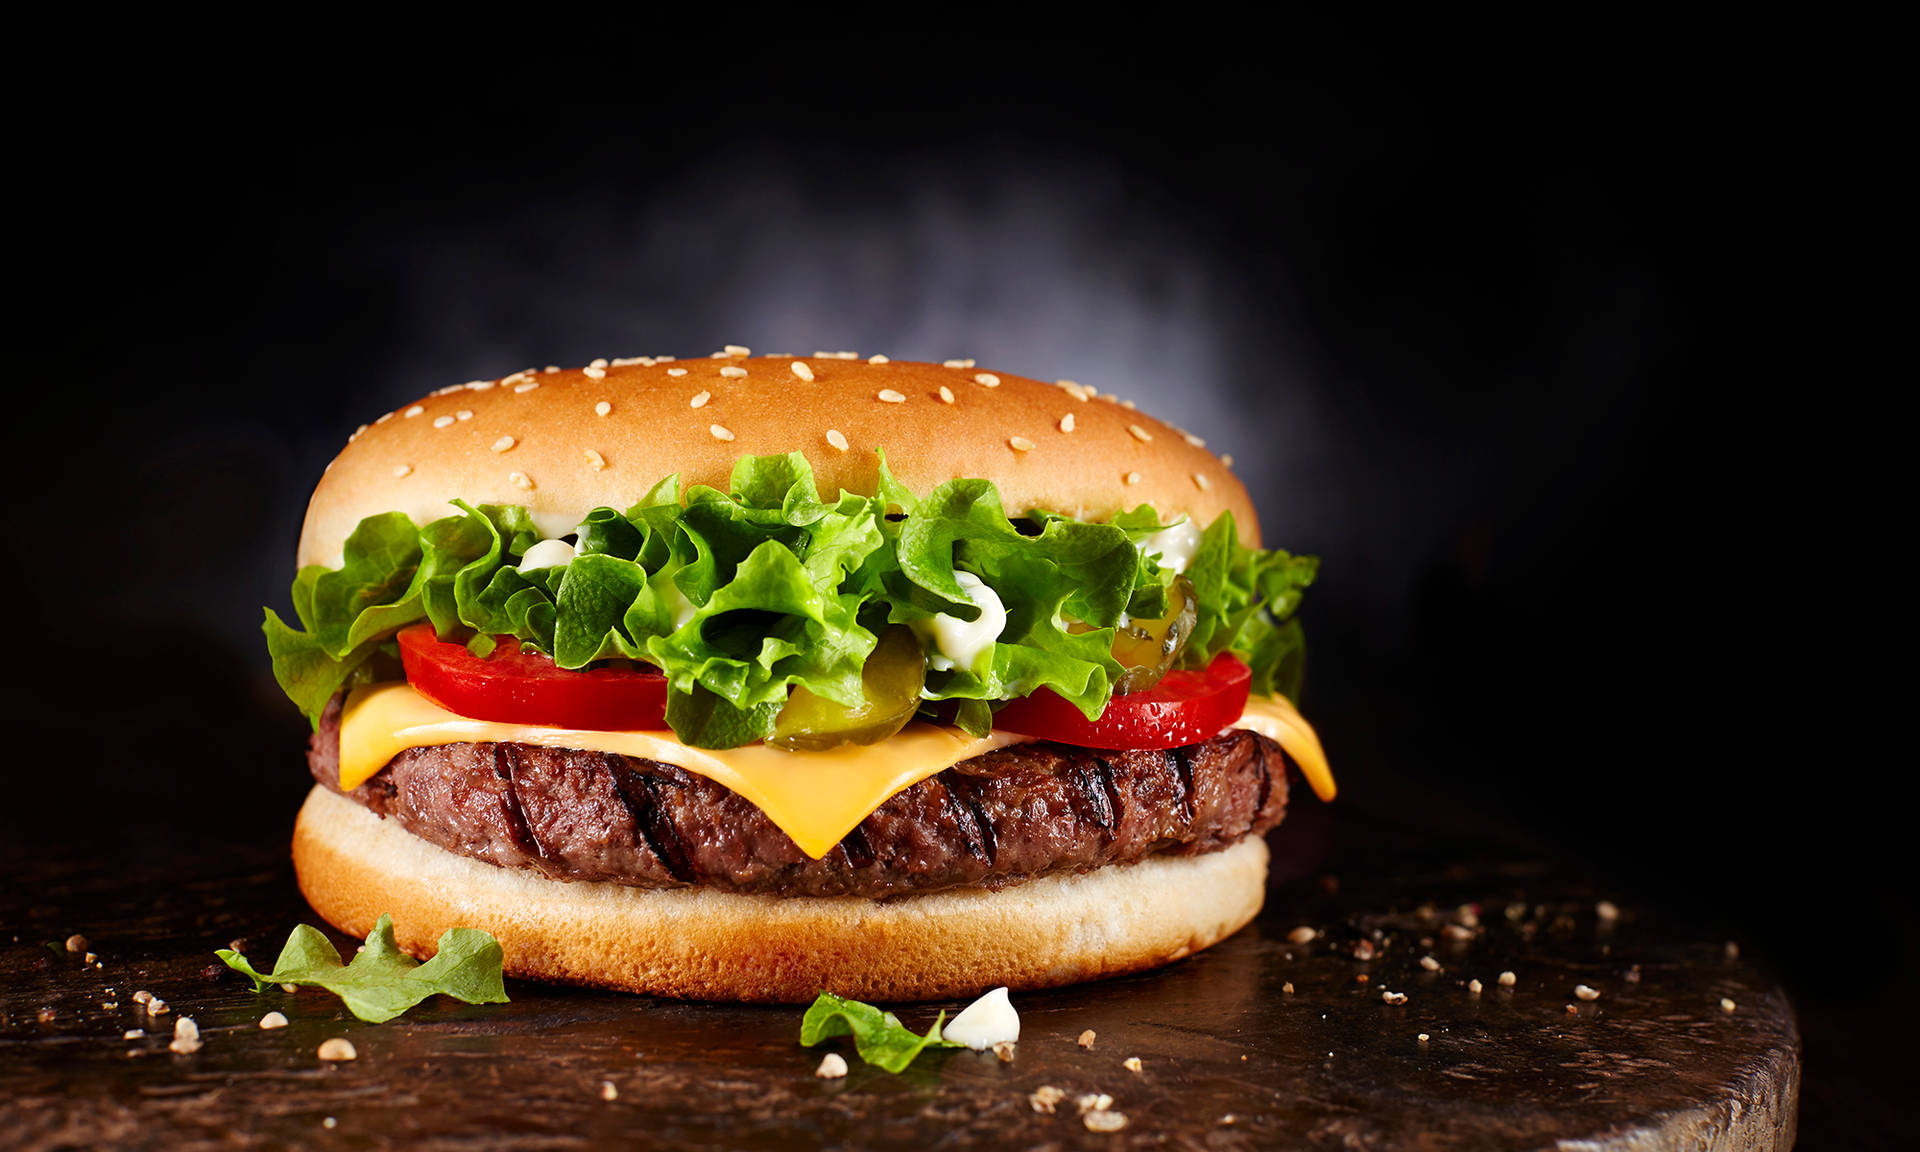 Caption: A Flavorful Feast - Burger King's Delicious Hamburger Wallpaper